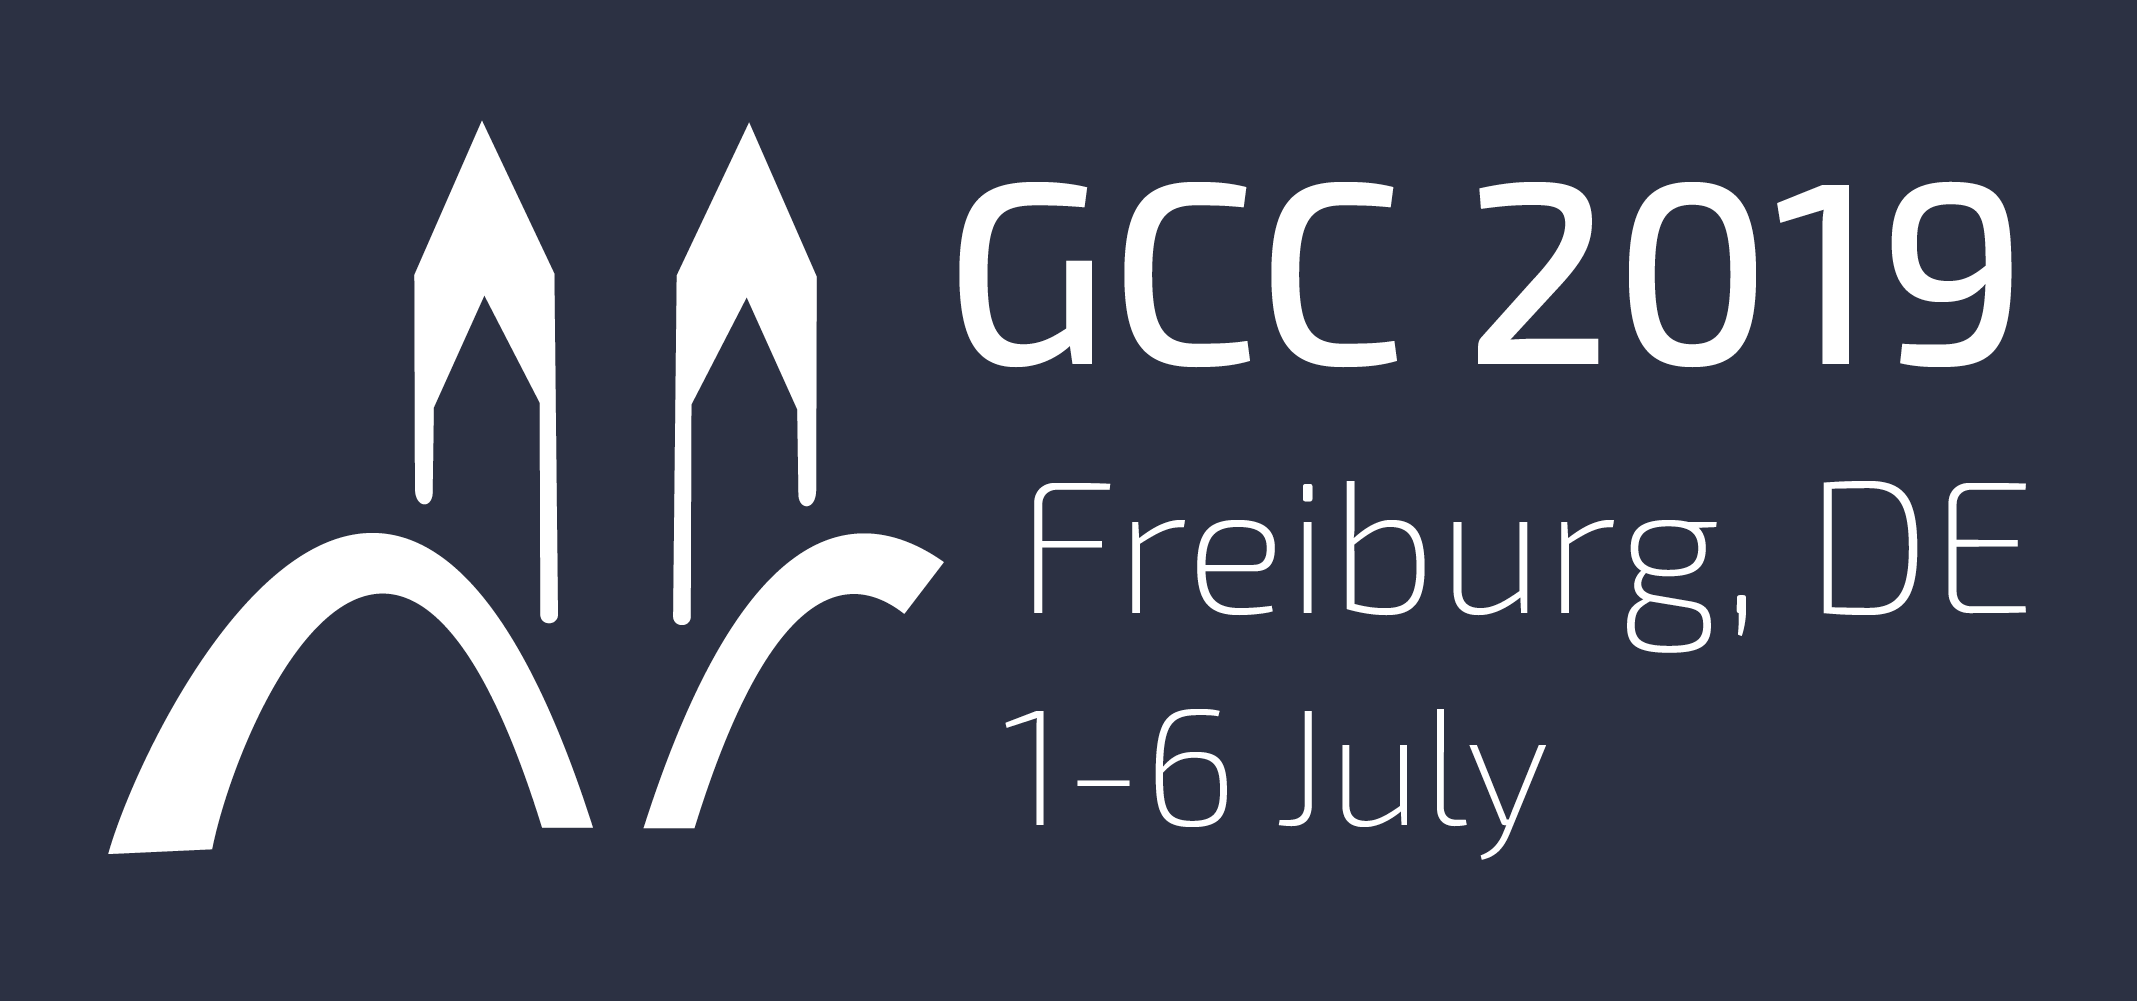 2019 Galaxy Community Conference (GCC2019)